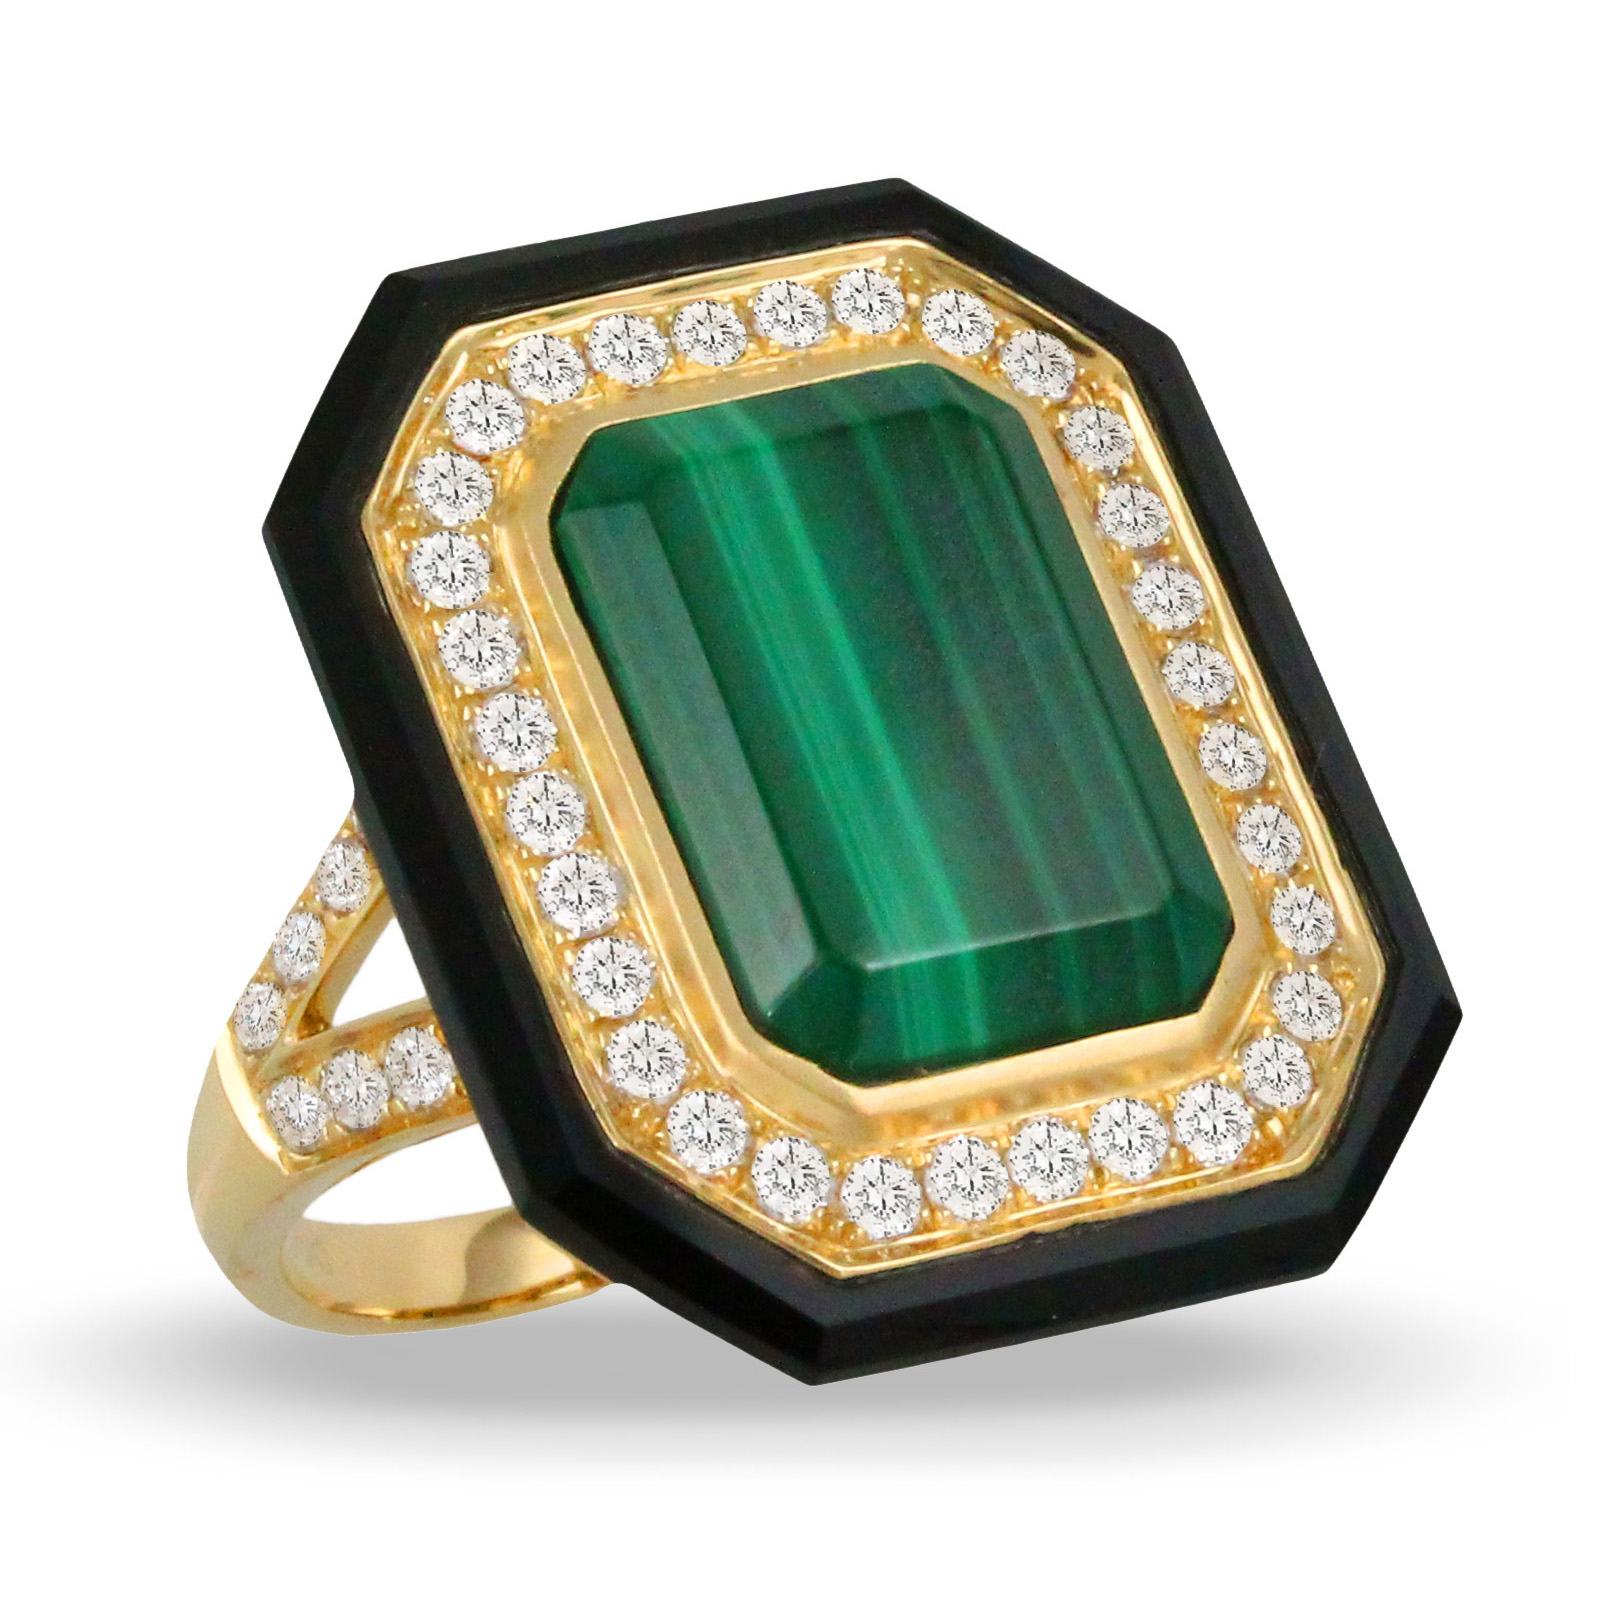 18K Yellow Gold Onyx Fashion Ring - 18K Yellow Gold Diamond Ring With Malachite Center And  Black Onyx Sides With Satin Finish Around Center Stone